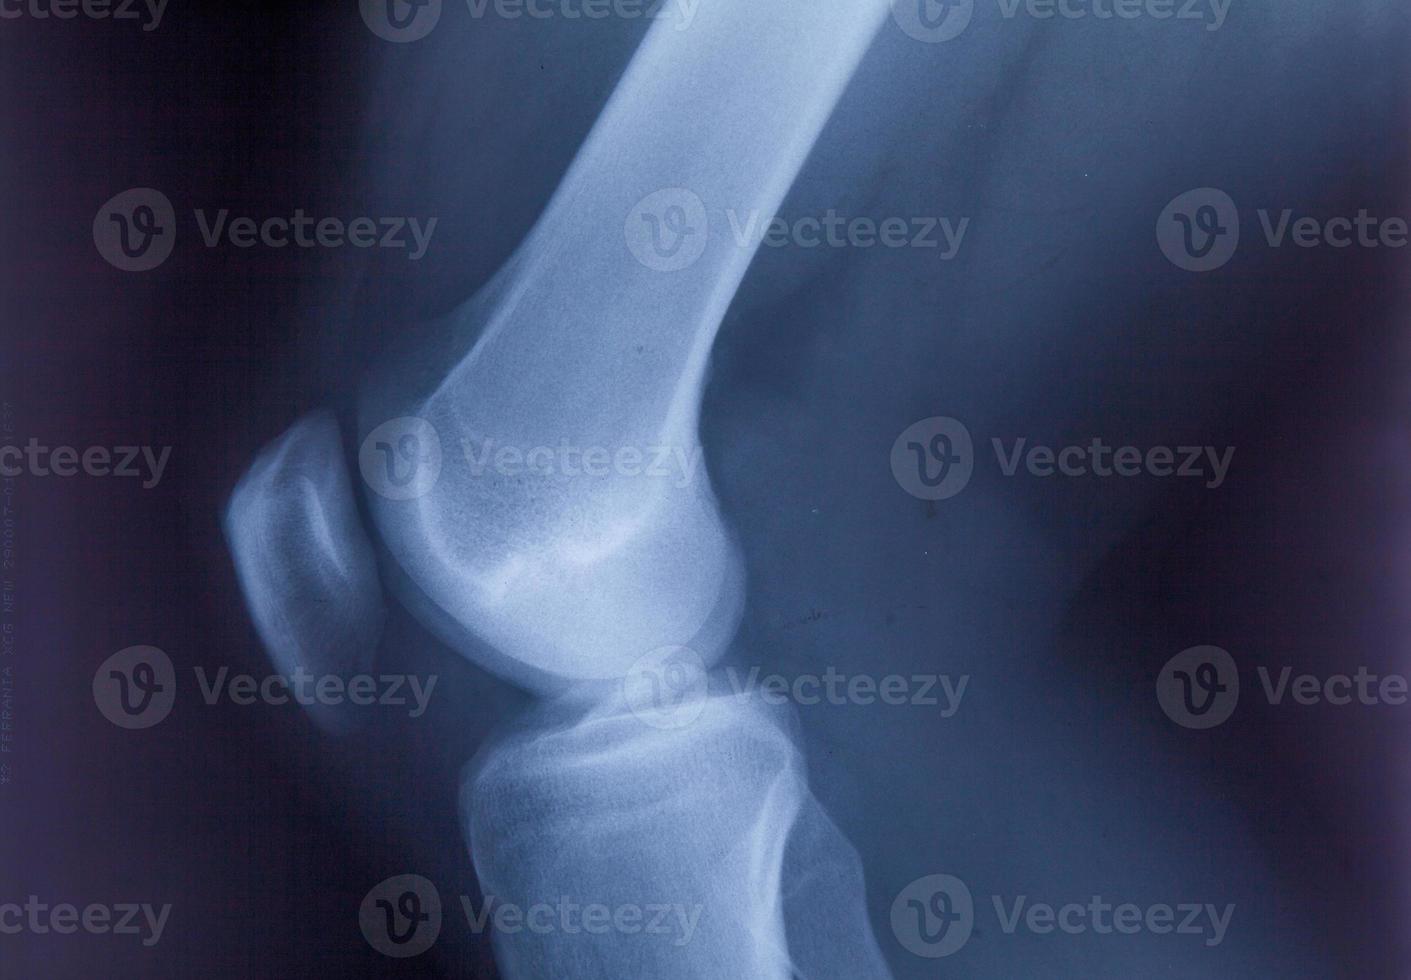 enkelvoeten en kniegewrichtspijn röntgenfoto mri-fotofilm foto